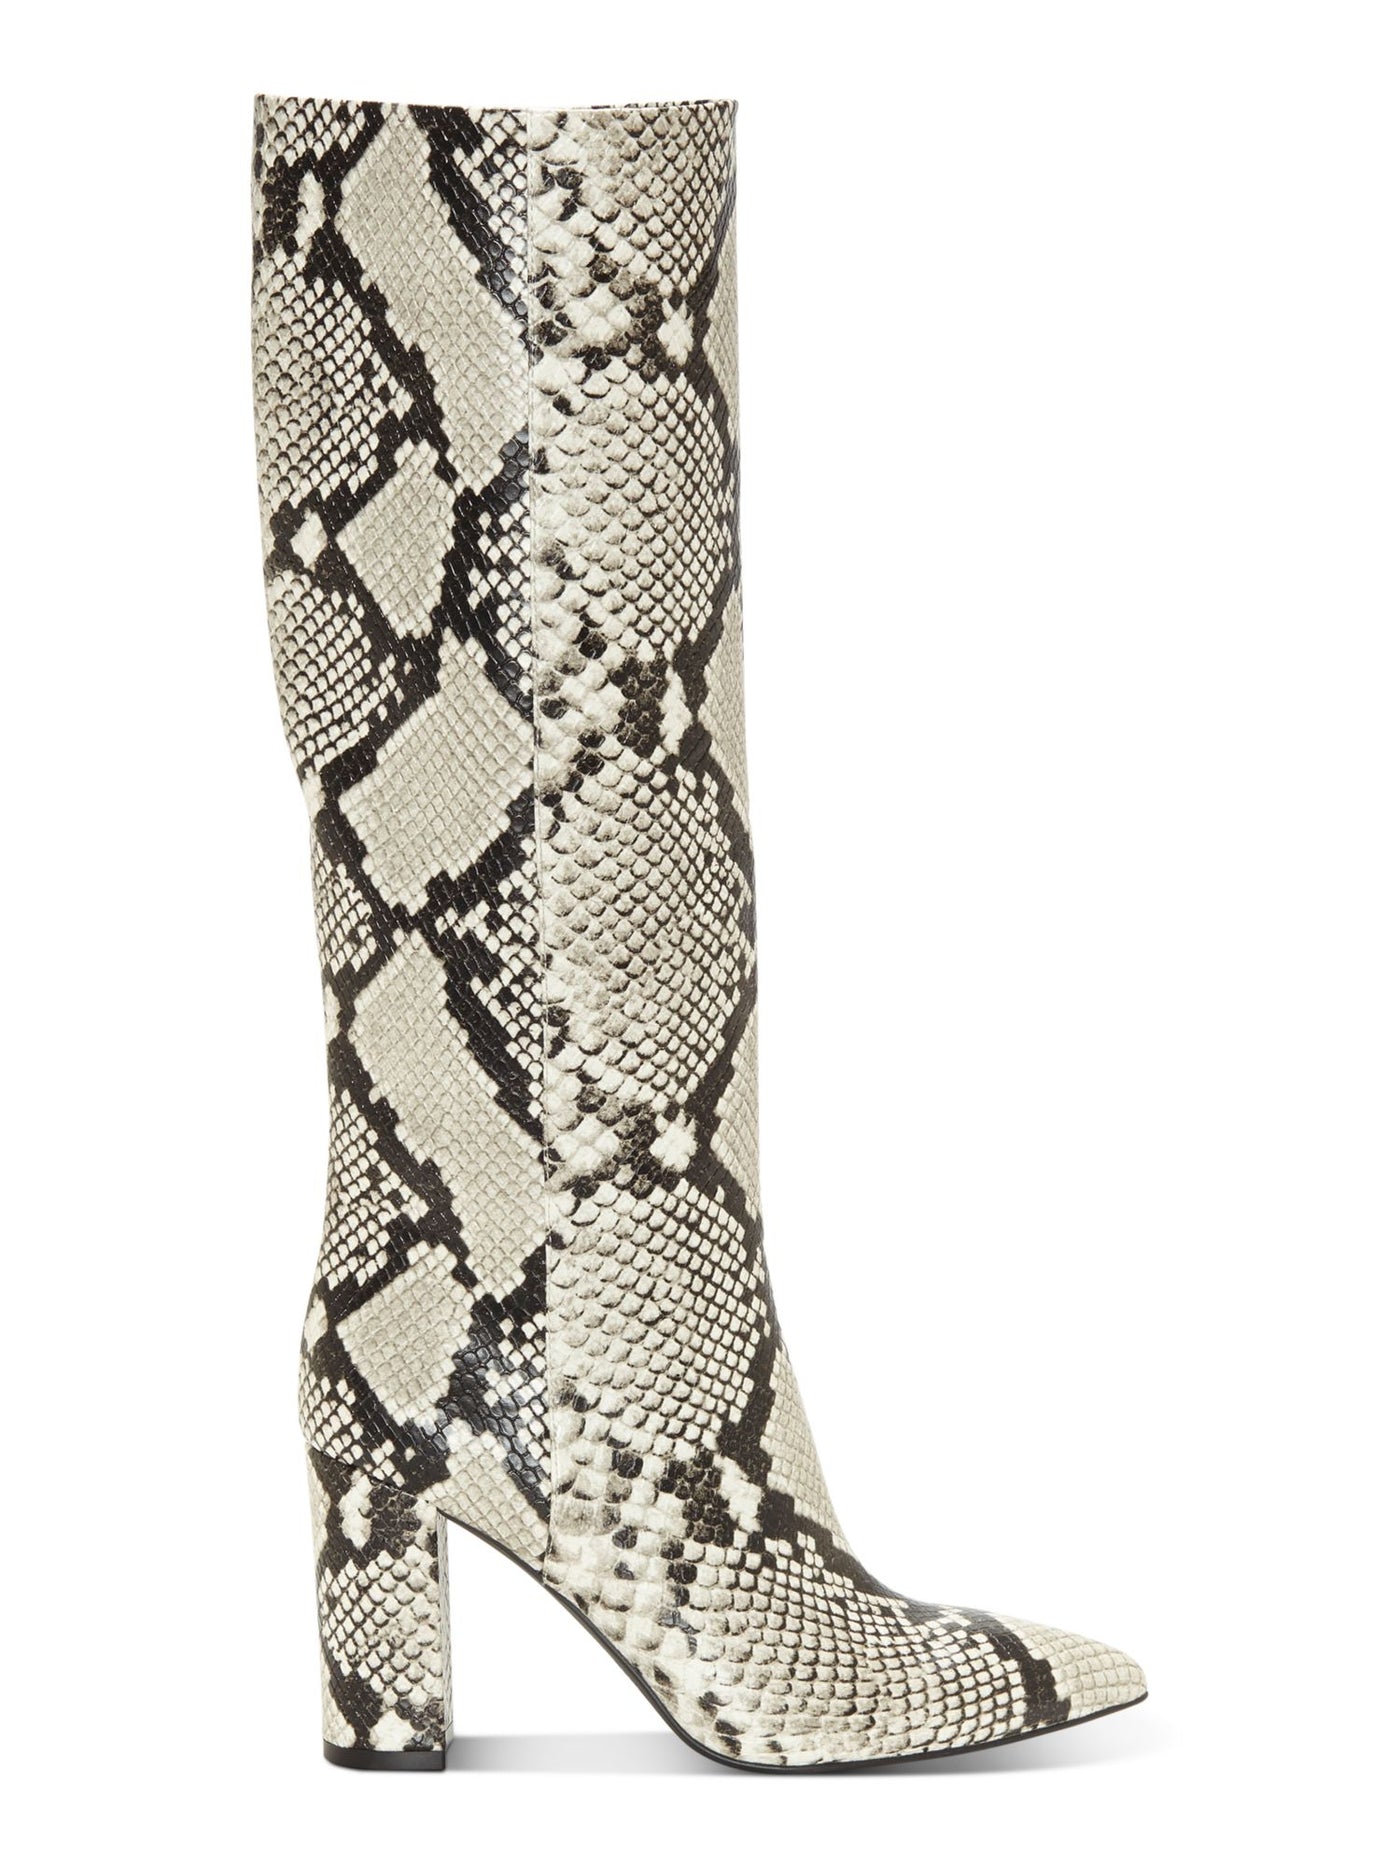 INC Womens Beige Animal Print Pointed Toe Block Heel Zip-Up Dress Boots 5